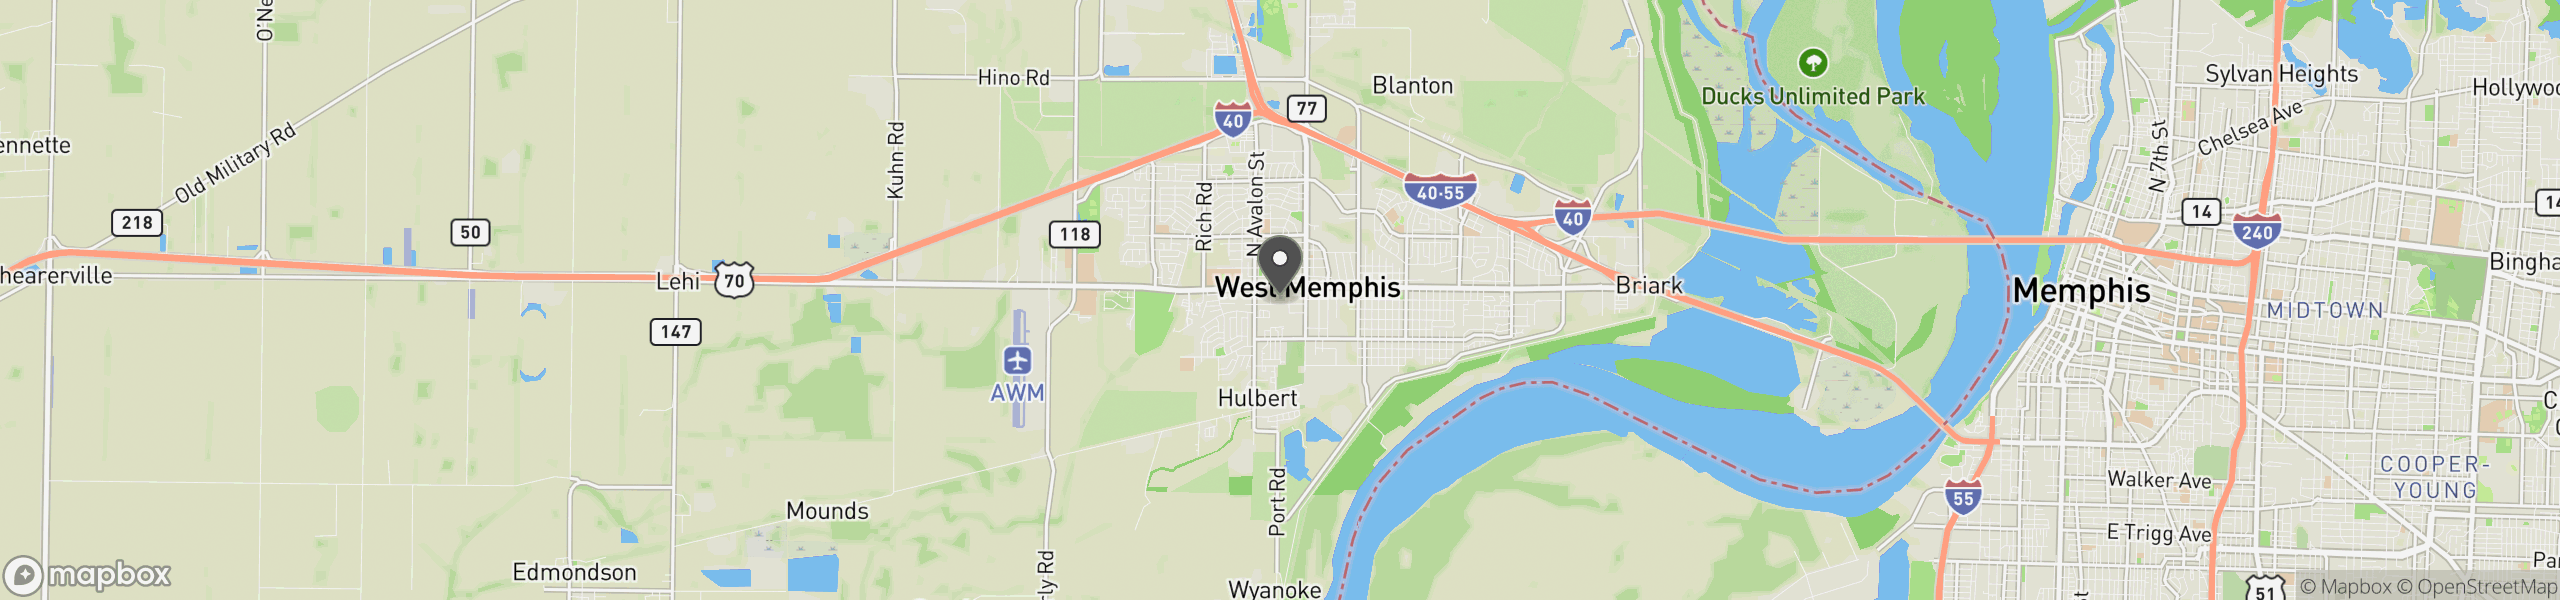 West Memphis, AR